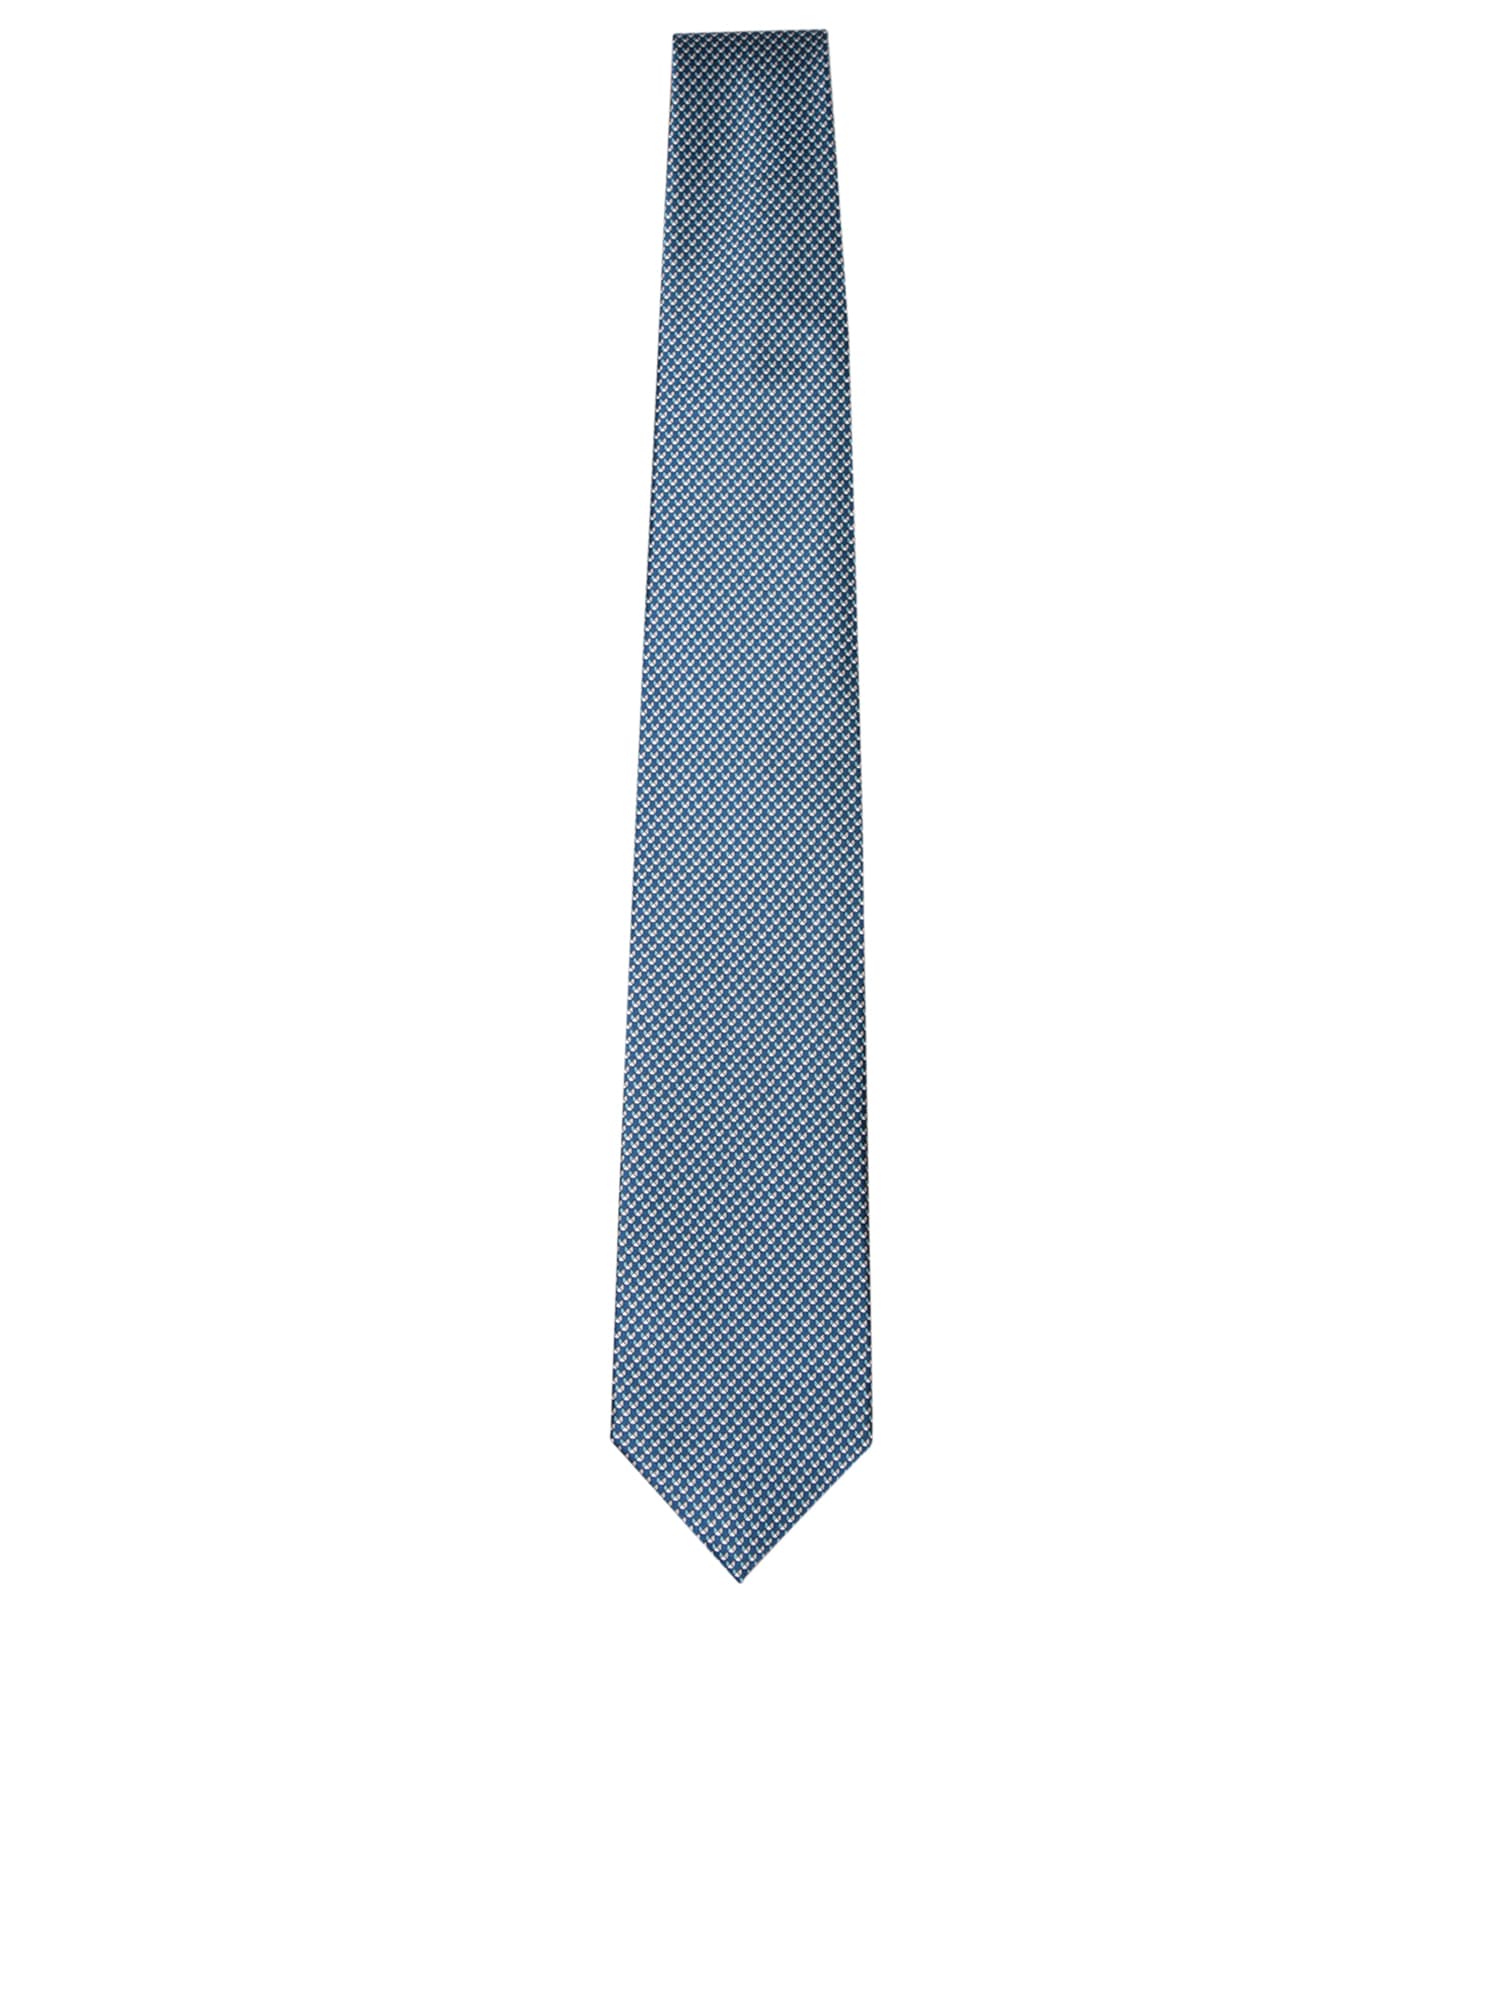 Micropattern Light Blue/white Tie